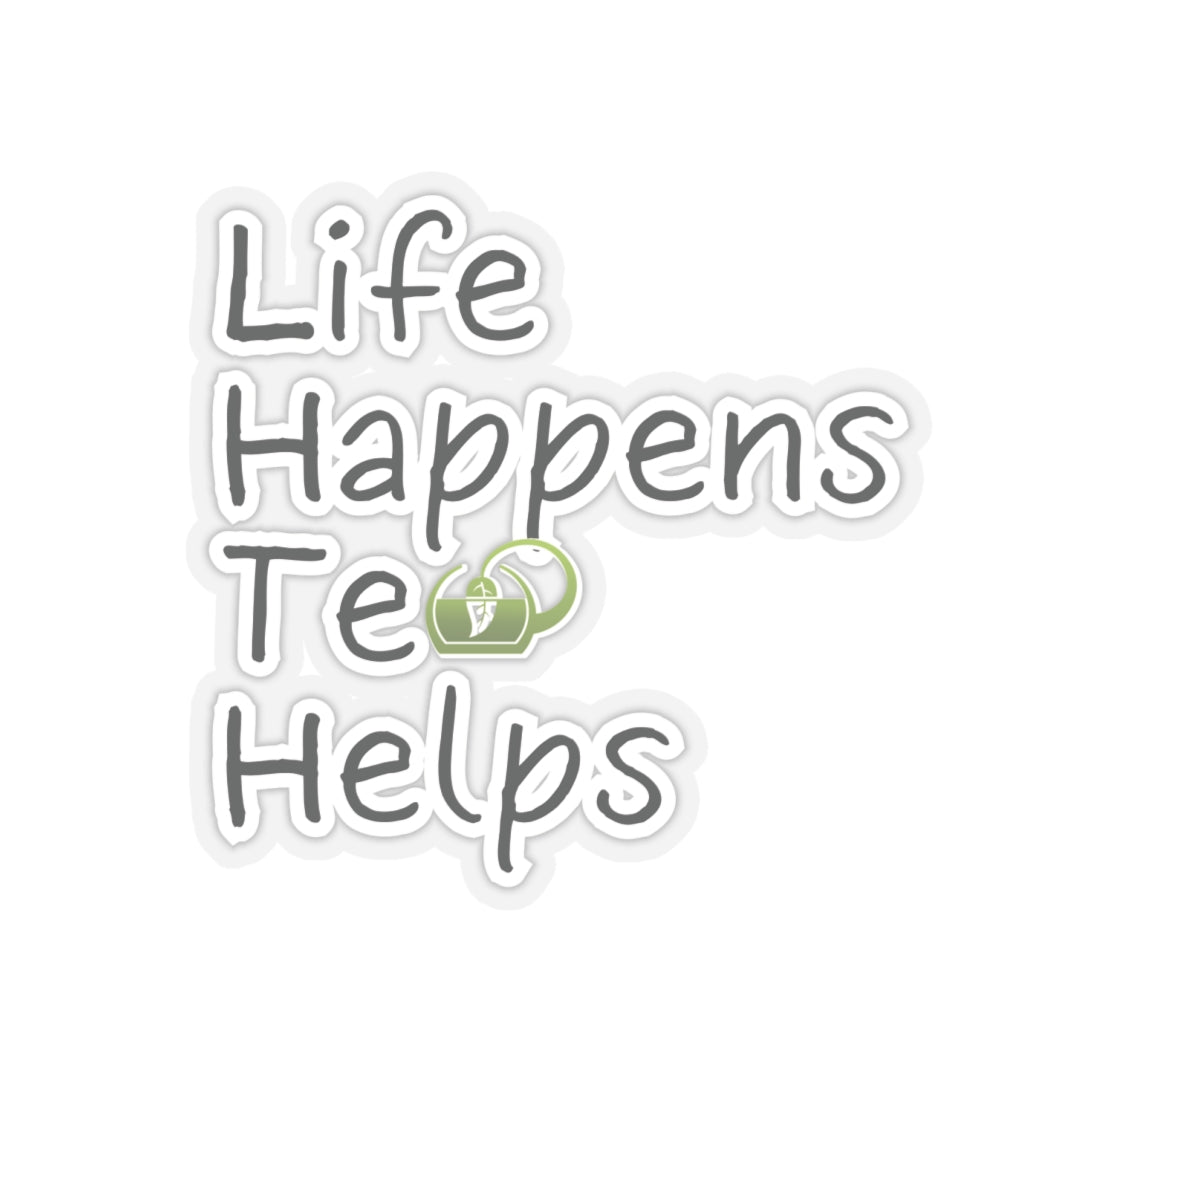 Life Happens Tea Helps Inspirational Quote Kiss-Cut Stickers-Paper products-6" × 6"-Transparent-mysticalcherry